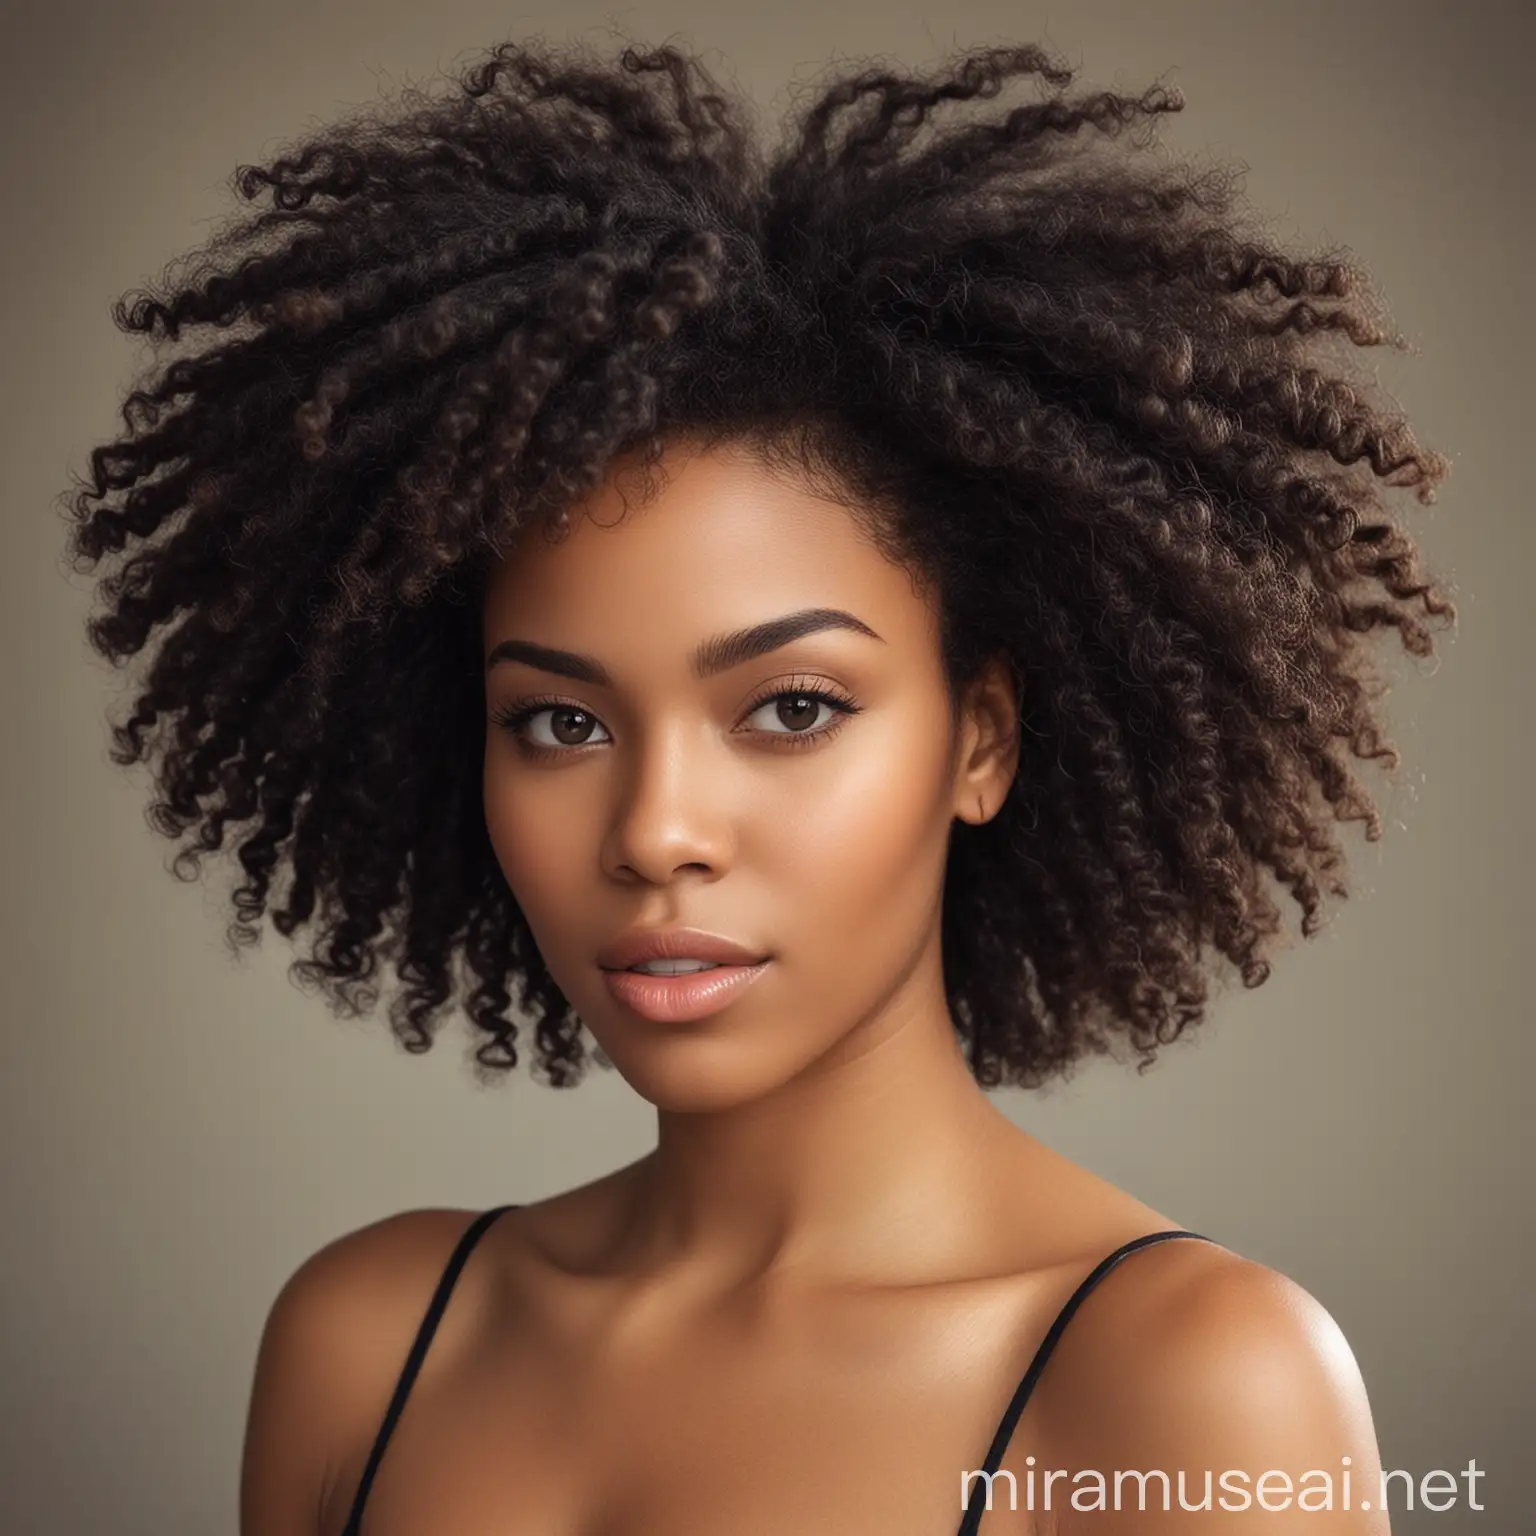 Beautiful Black Women with Natural Hair